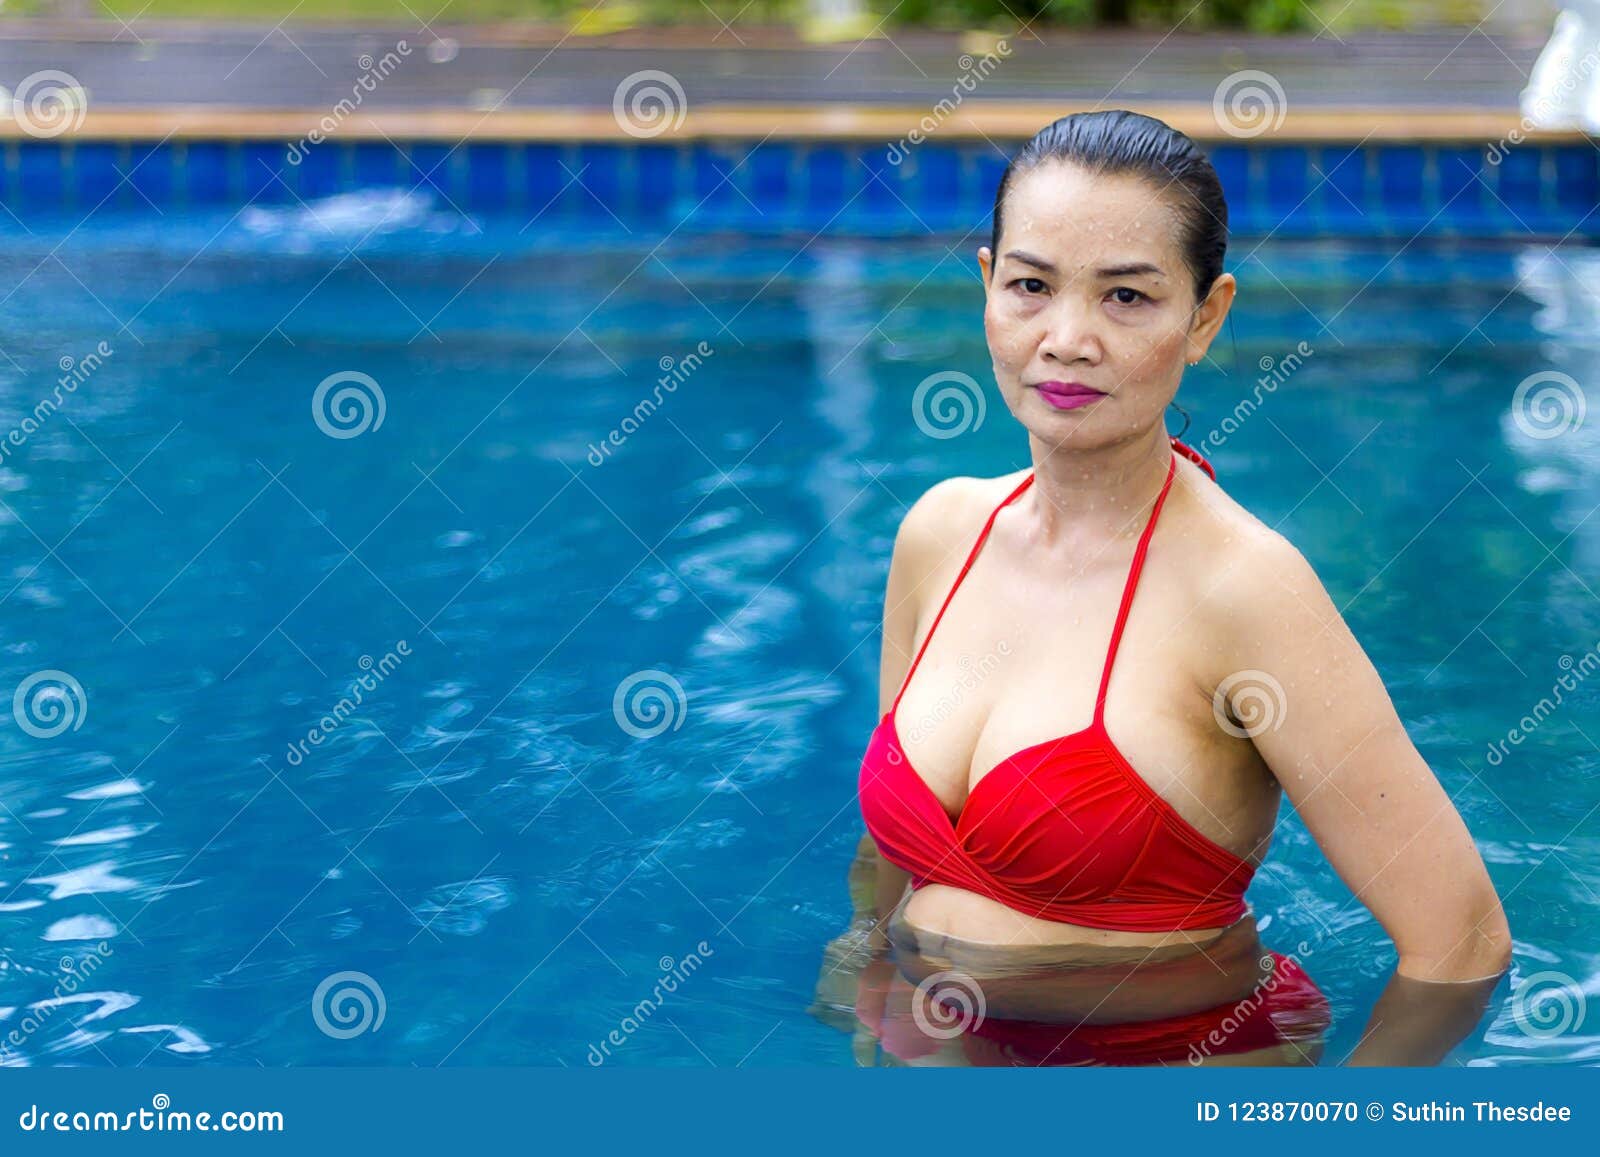 Woman Big Breast Sex Symbol with Red Bikini at Swimming Pool Stock Photo pic